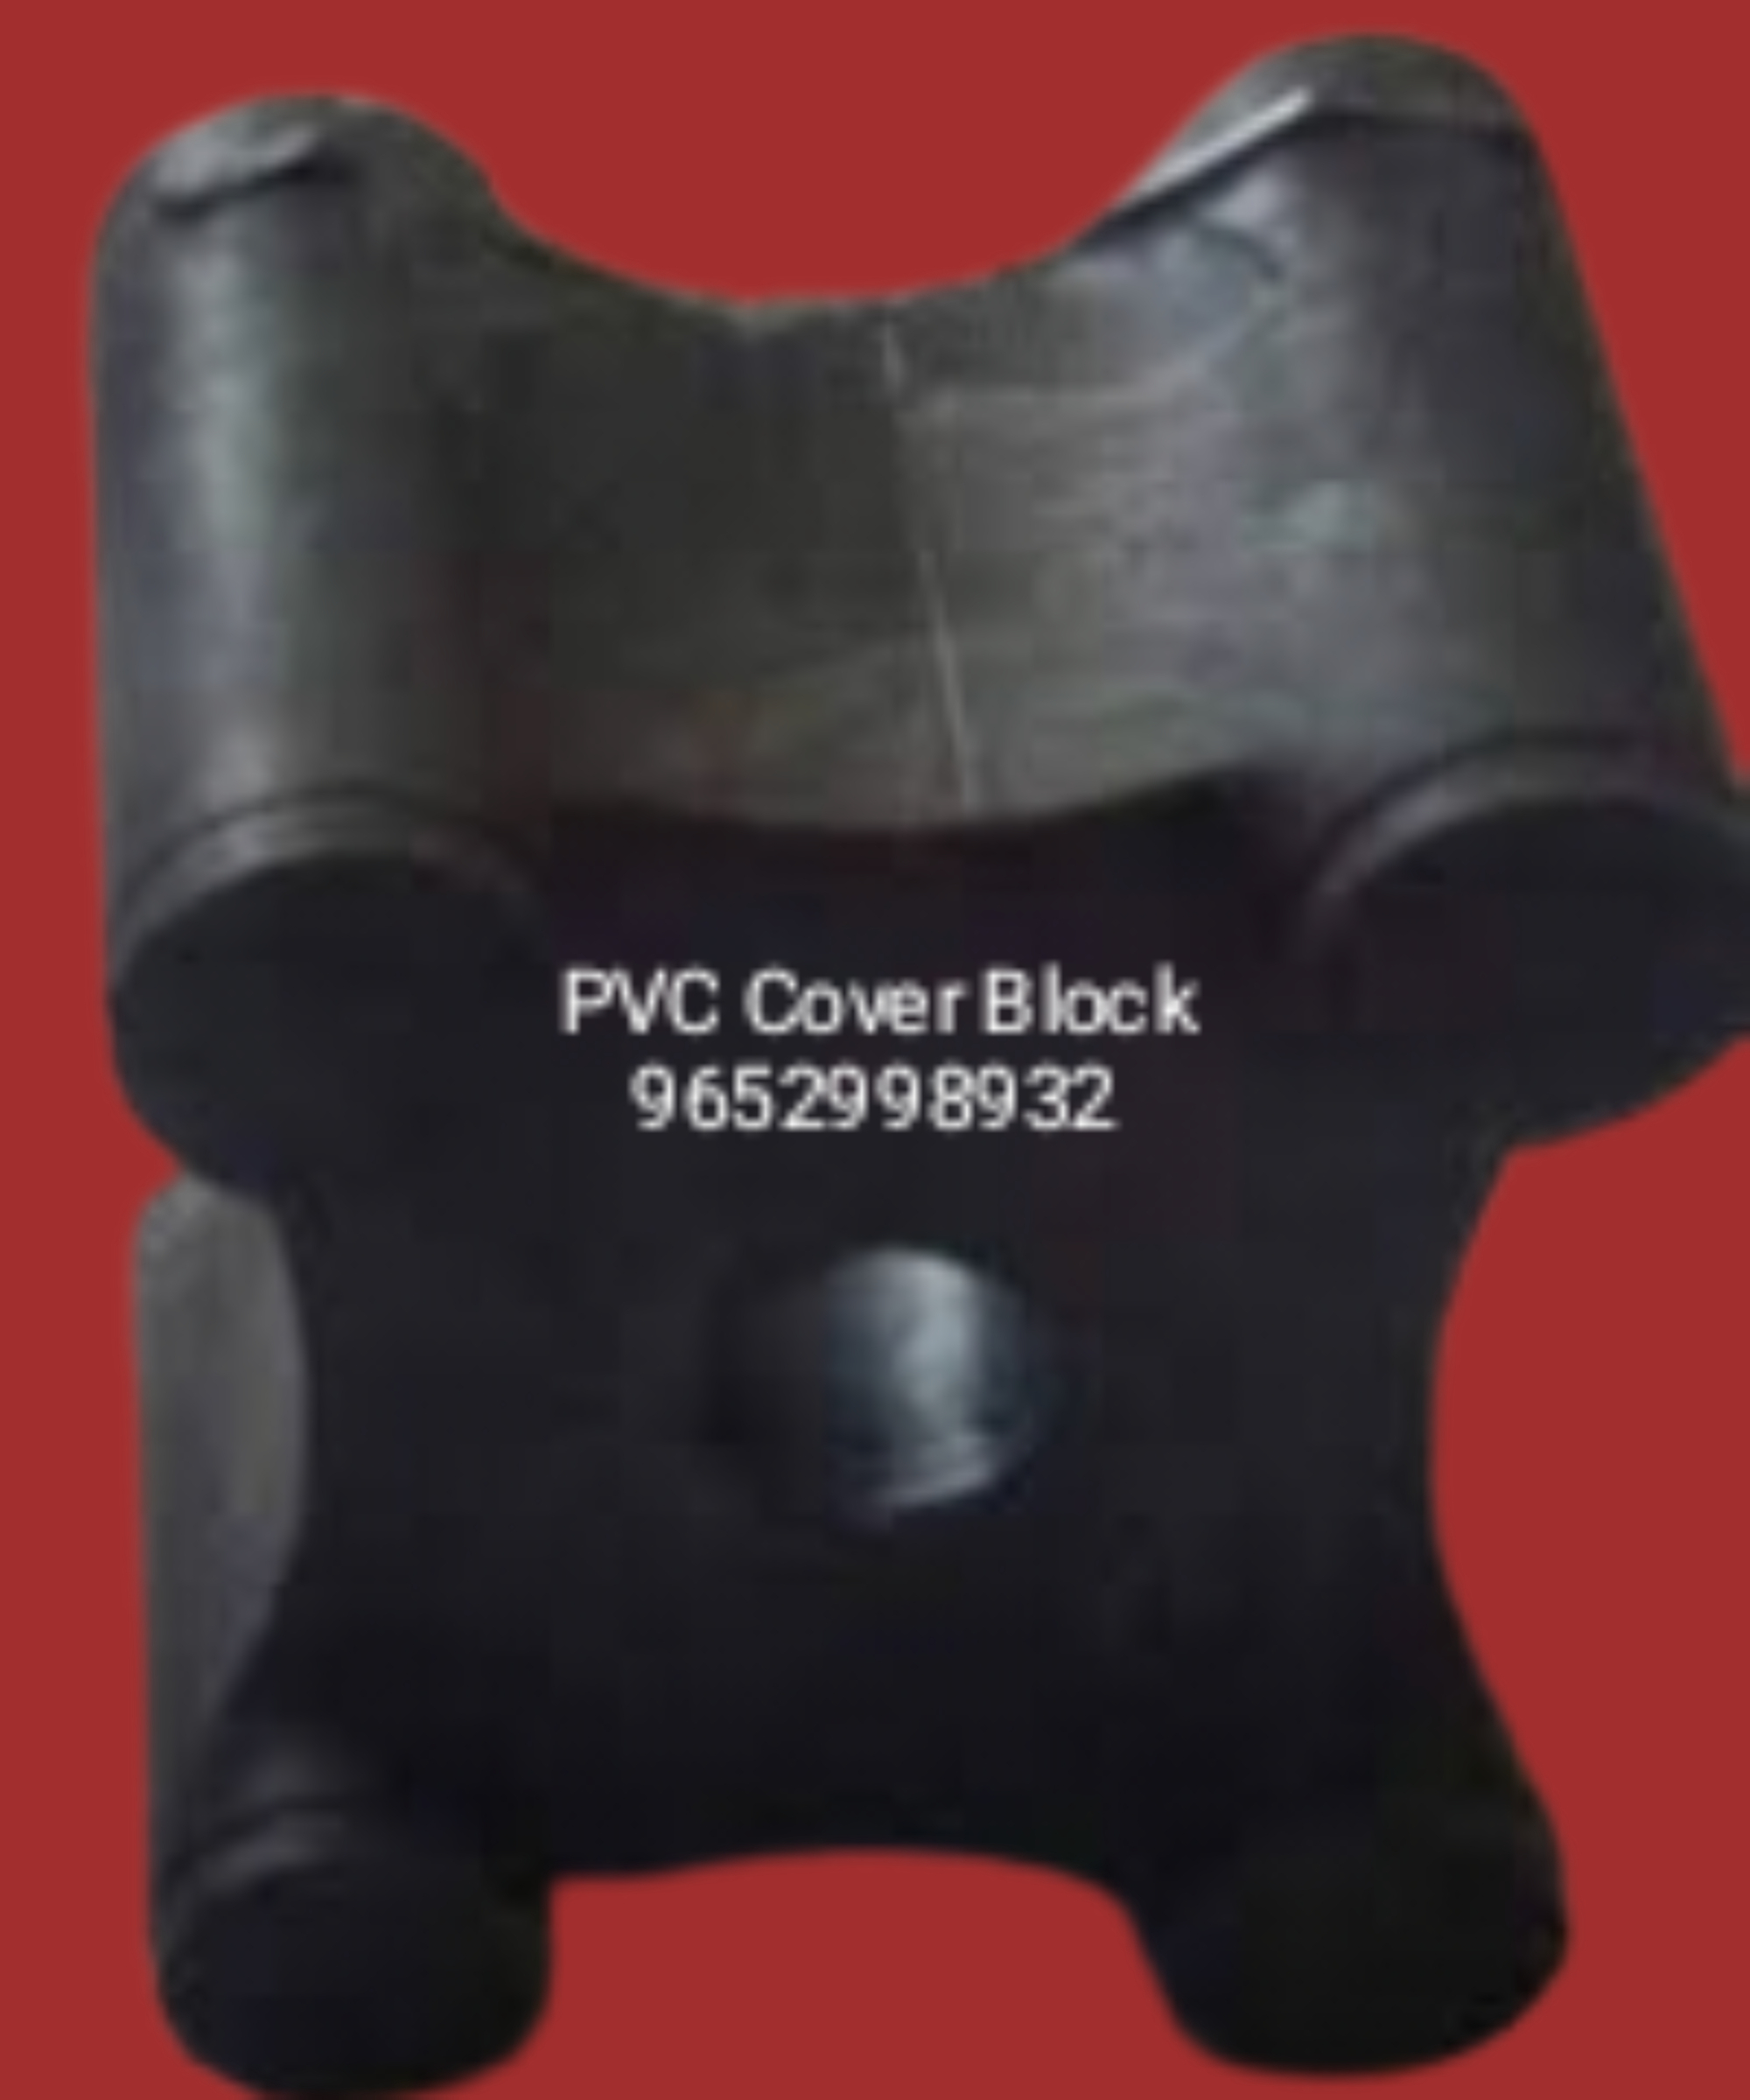 PVC Cover Block